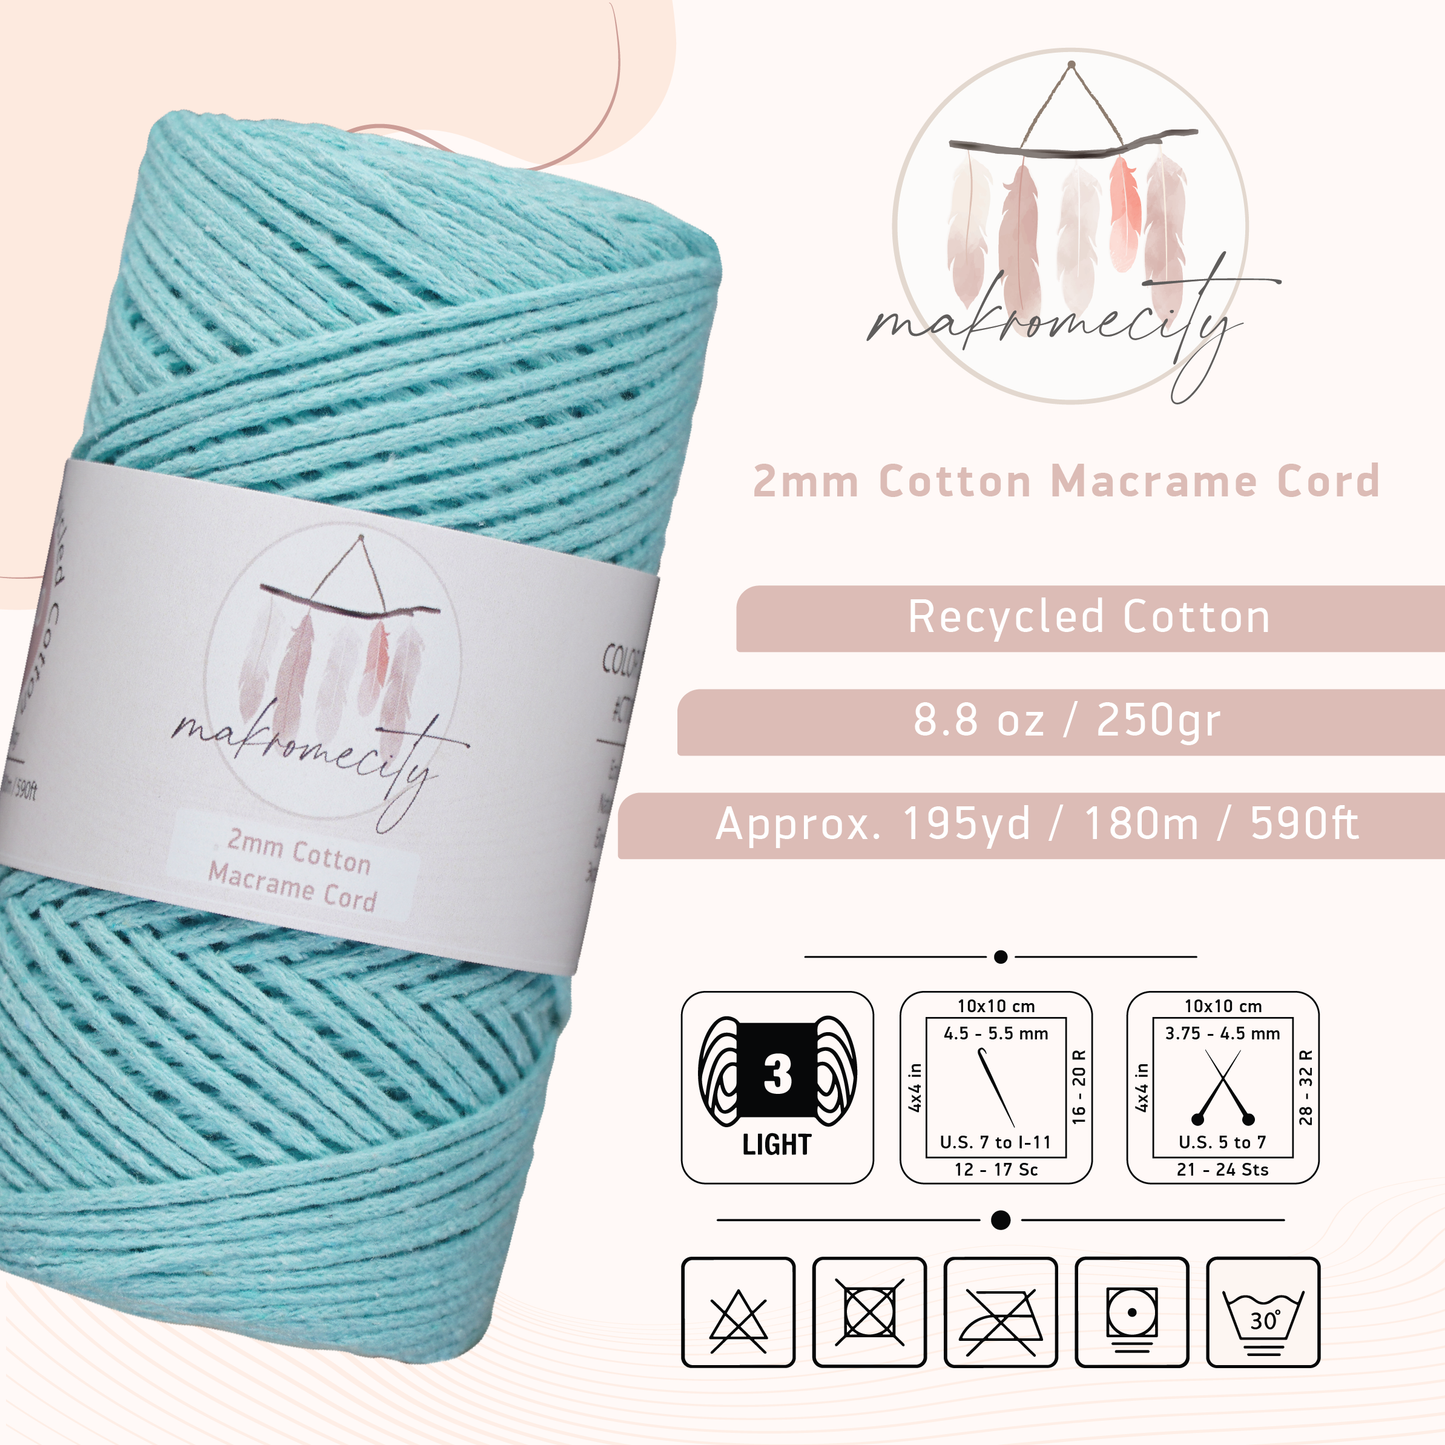 Cotton Macrame Cord 2mm x 195 Yards (590 feet) 2mm - Mint